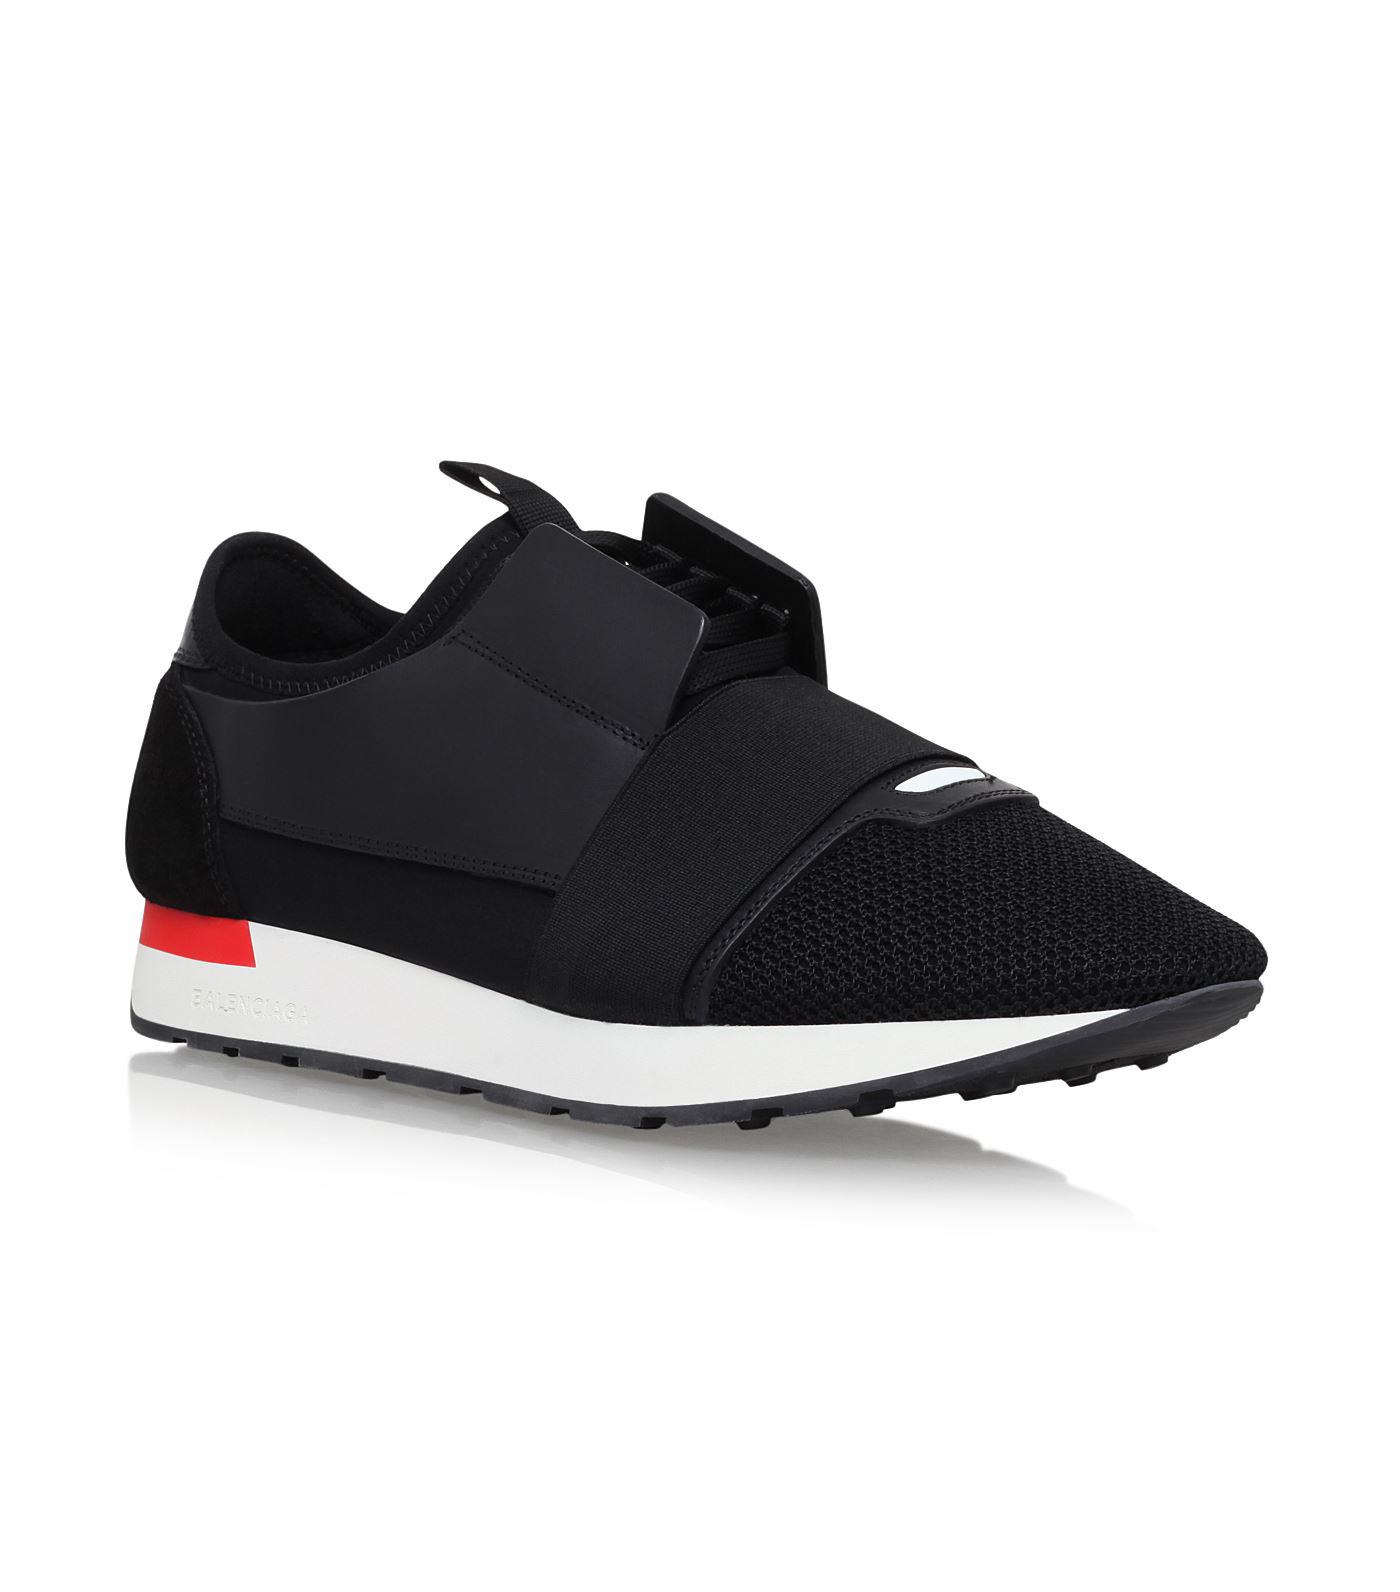 Balenciaga Leather Elastic Runner Sneakers in Black for Men - Lyst